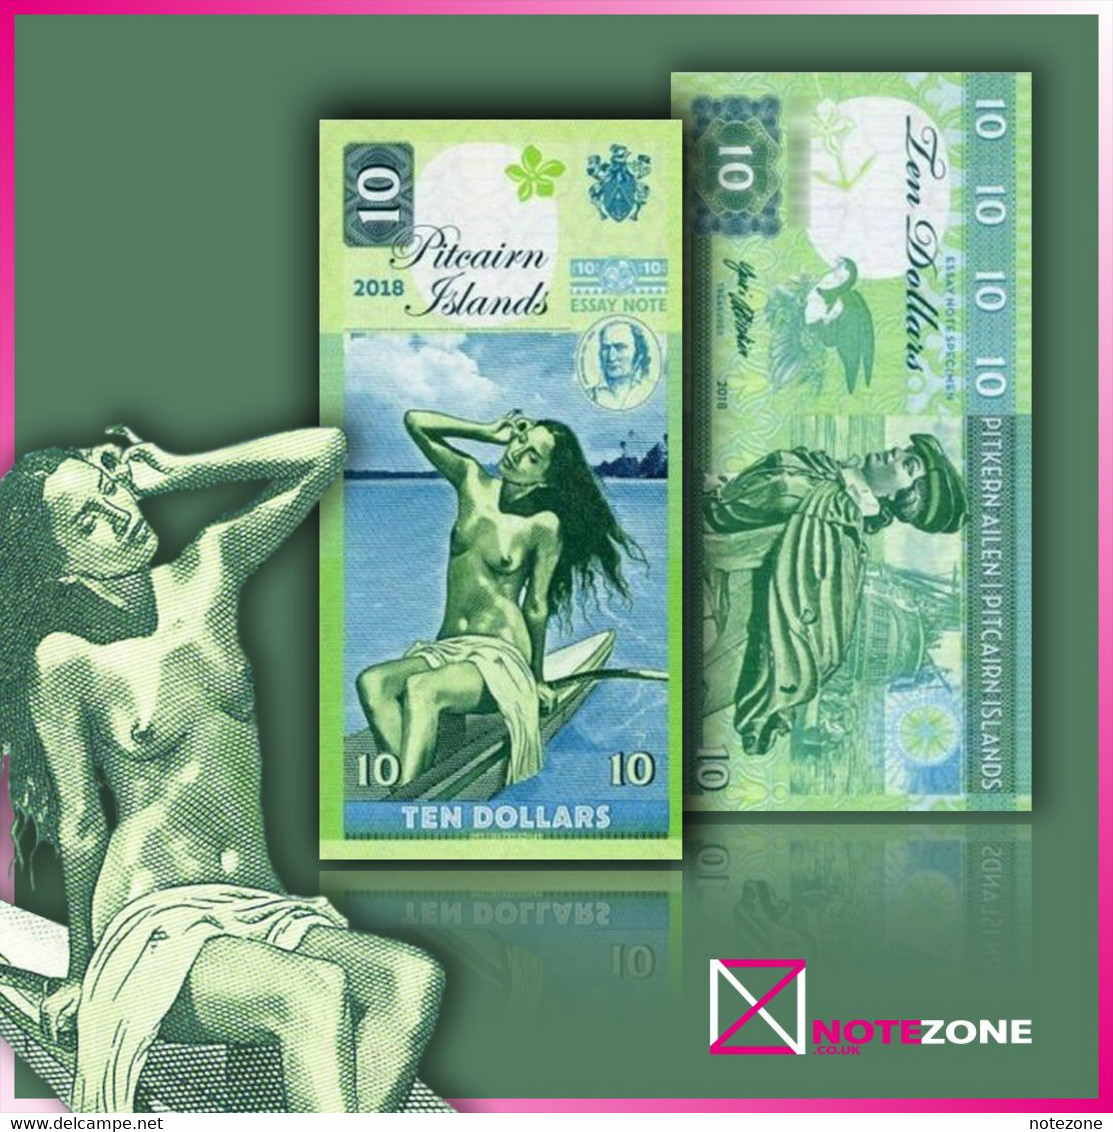 Matej Gabris $10 Pitcairn Islands Banknote Private Fantasy Test - Verzameleeksen